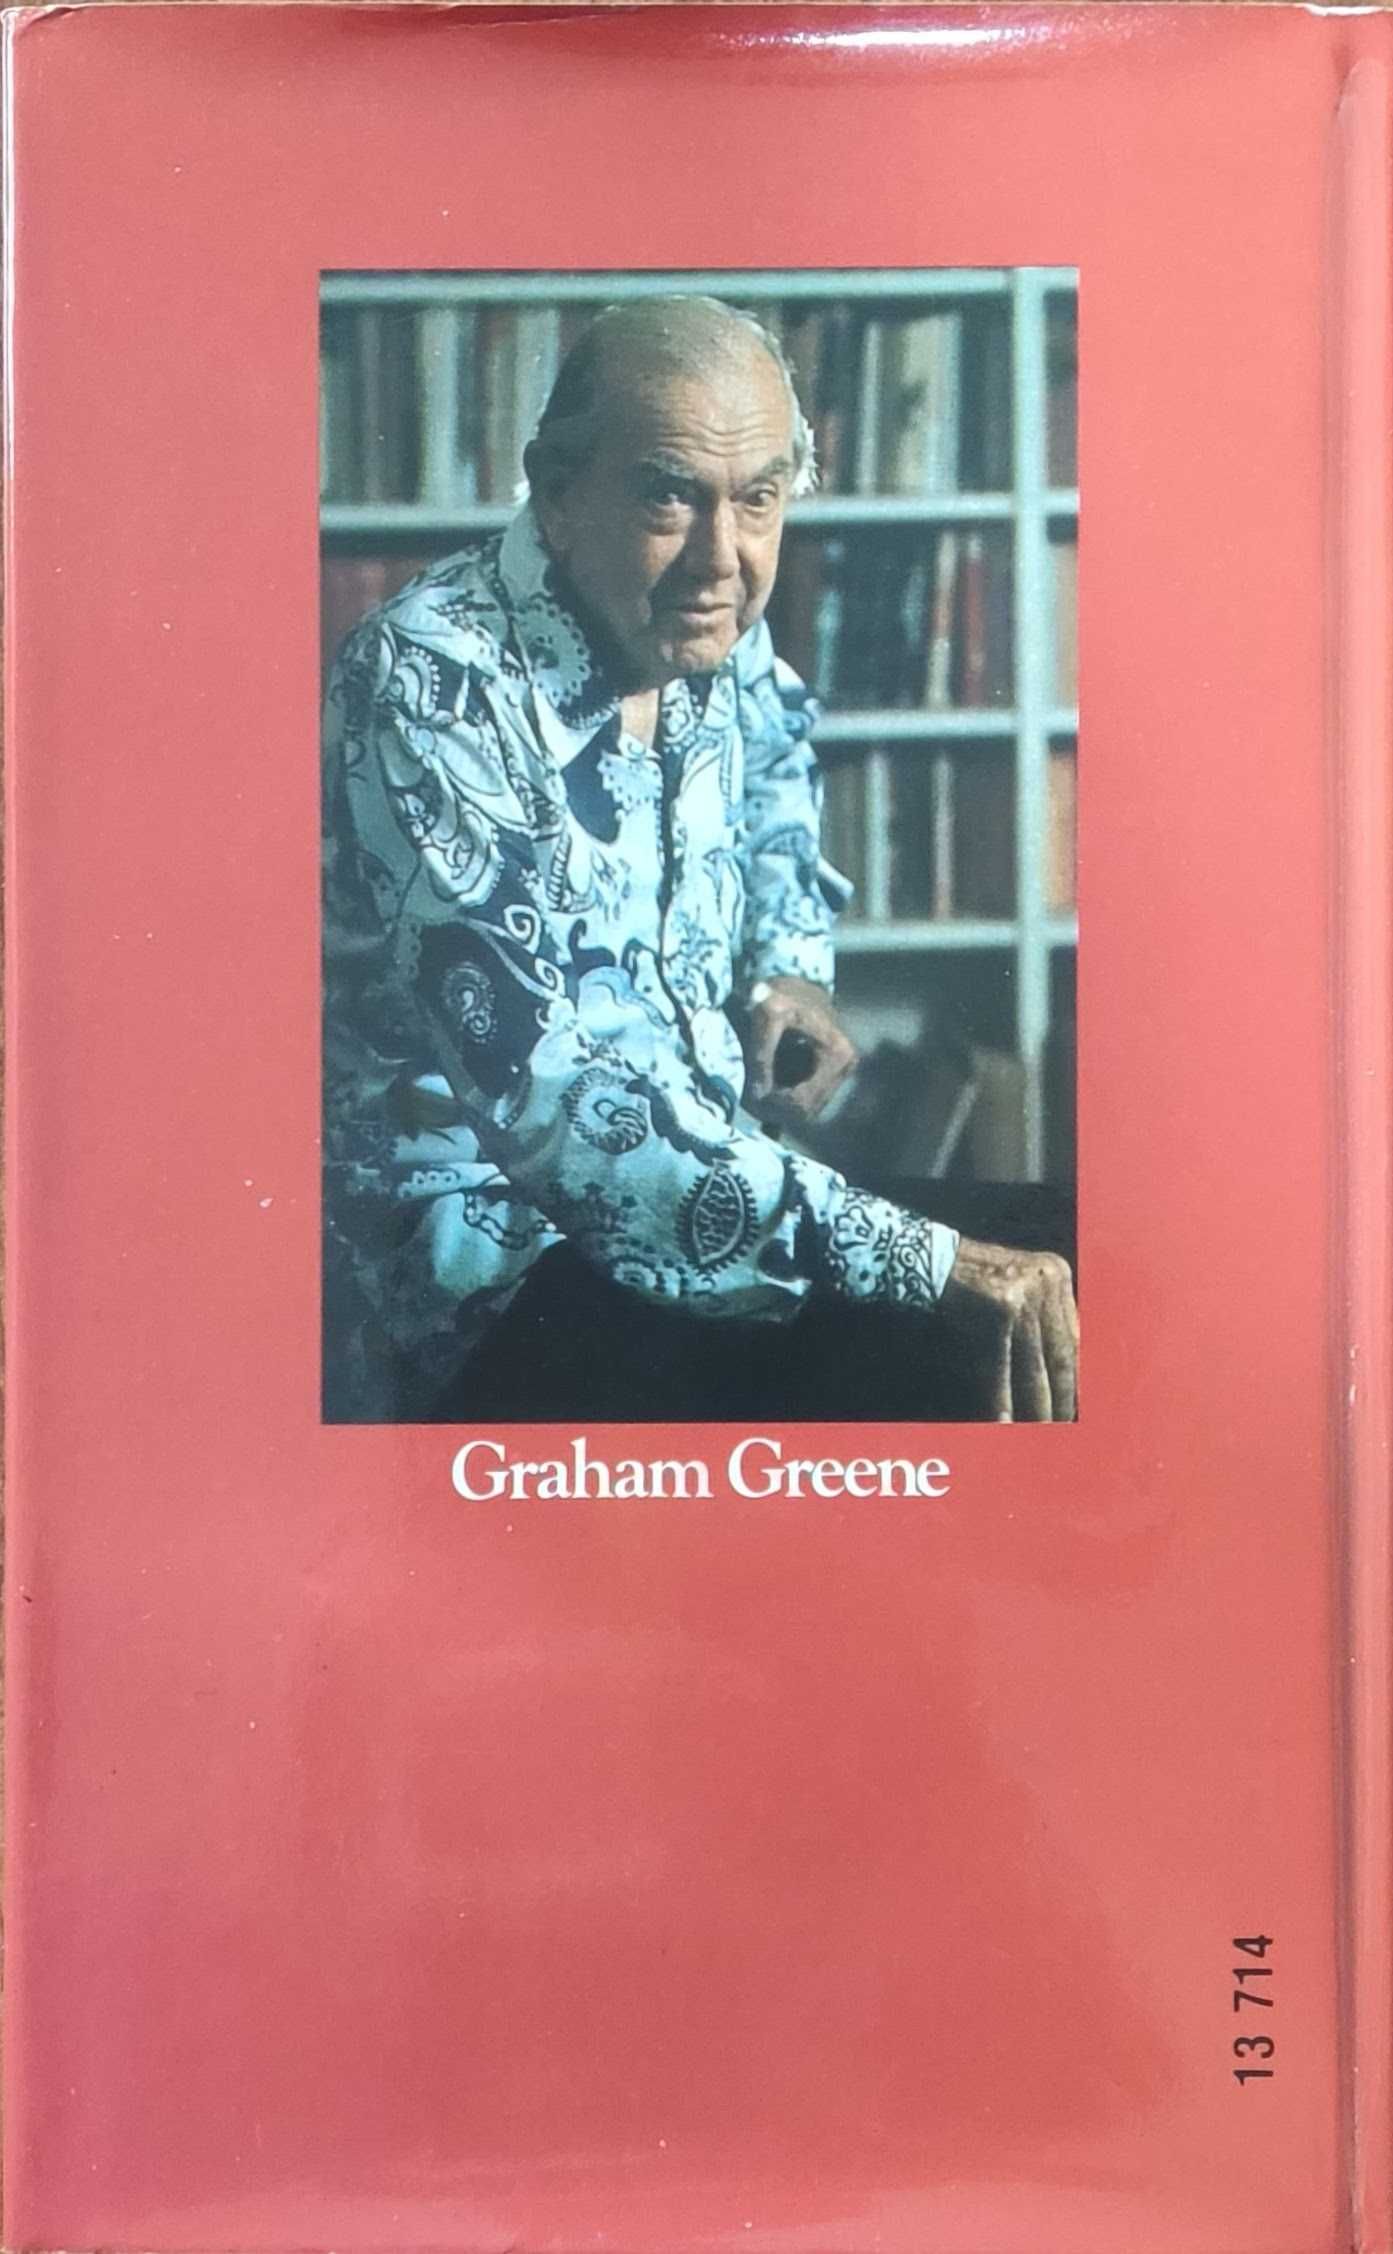 Livro "MONSENHOR QUIXOTE" de Graham Greene